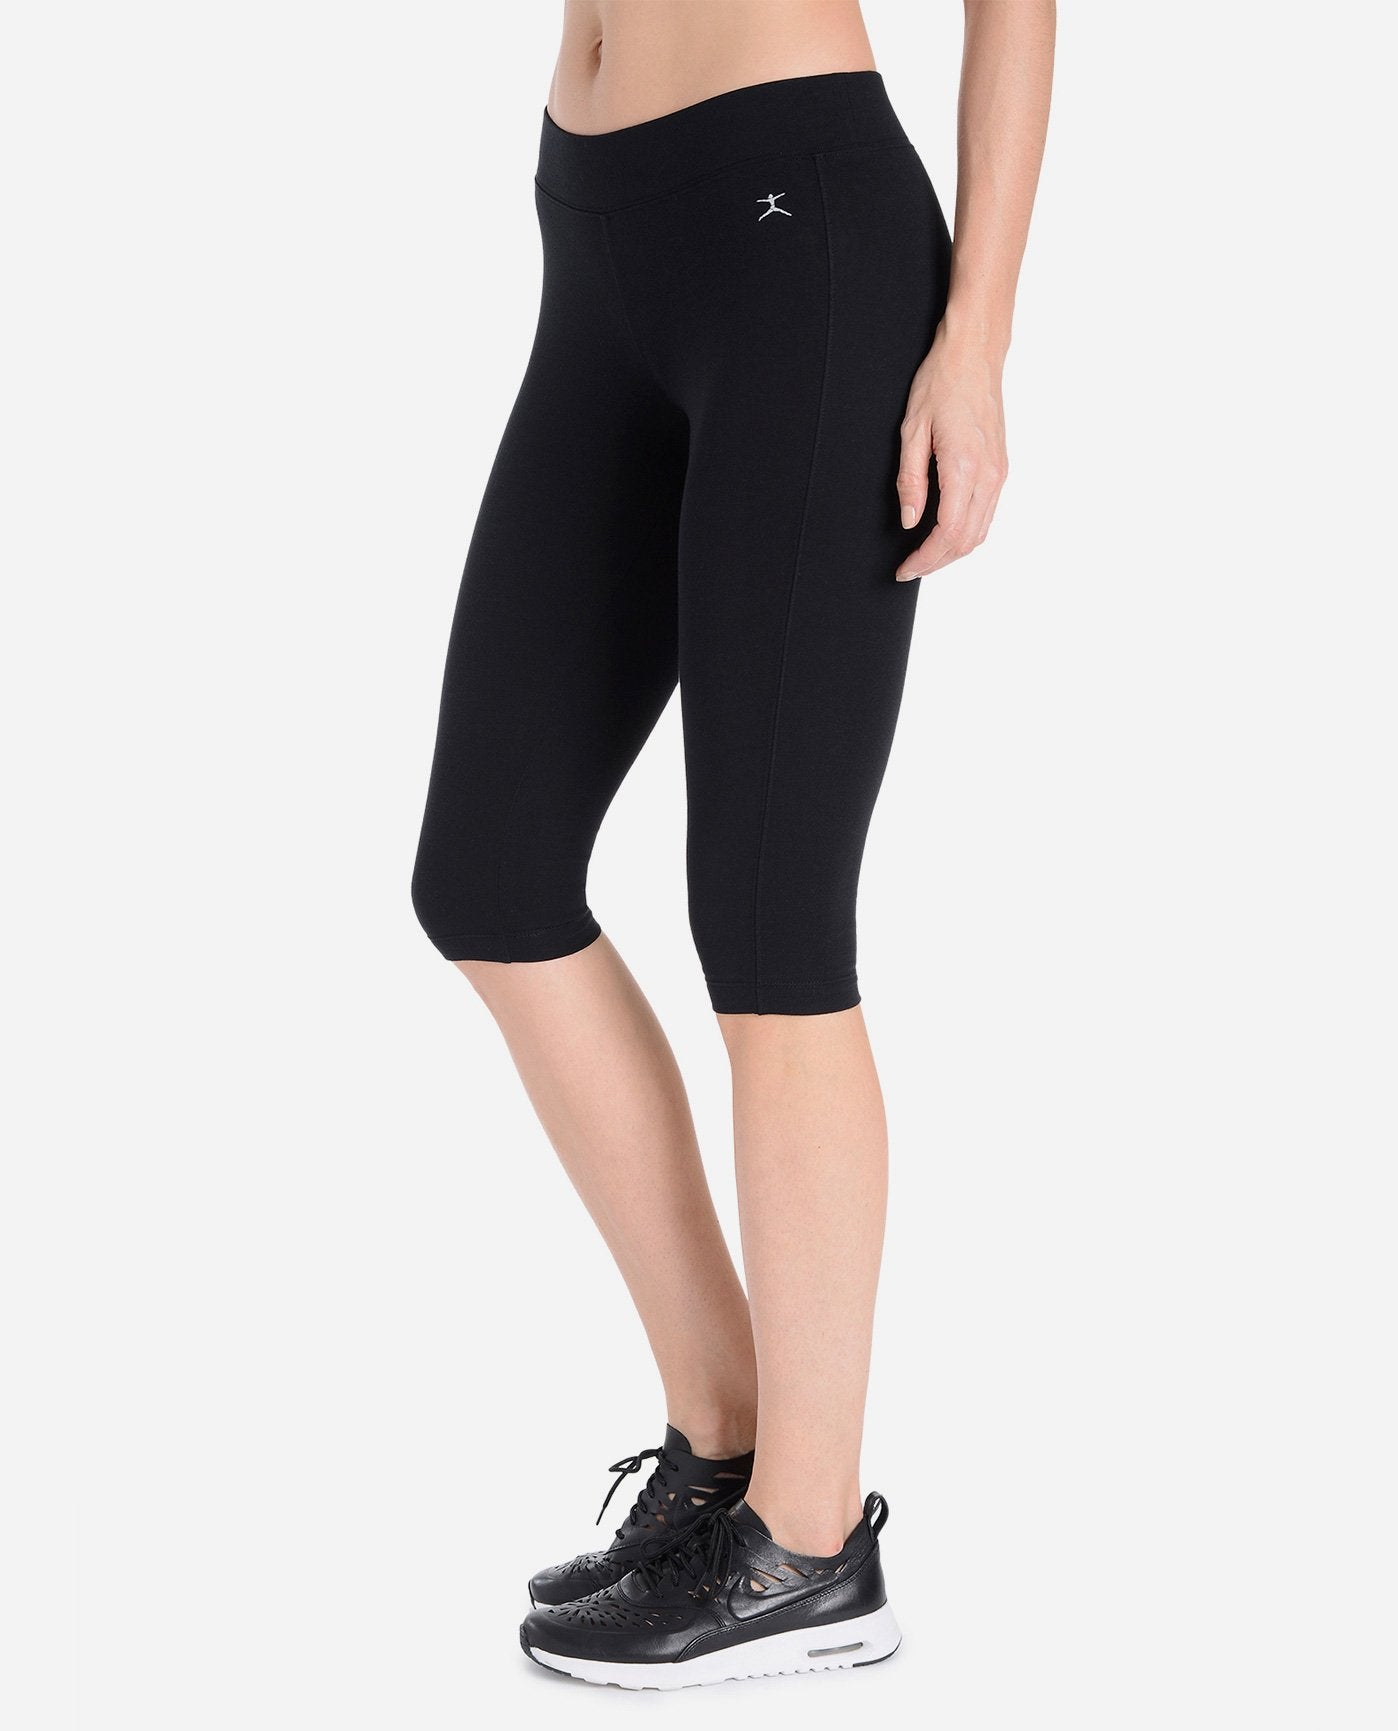 Danskin Now Cropped Wide Leg Women's Activewear Pants - Black - Large